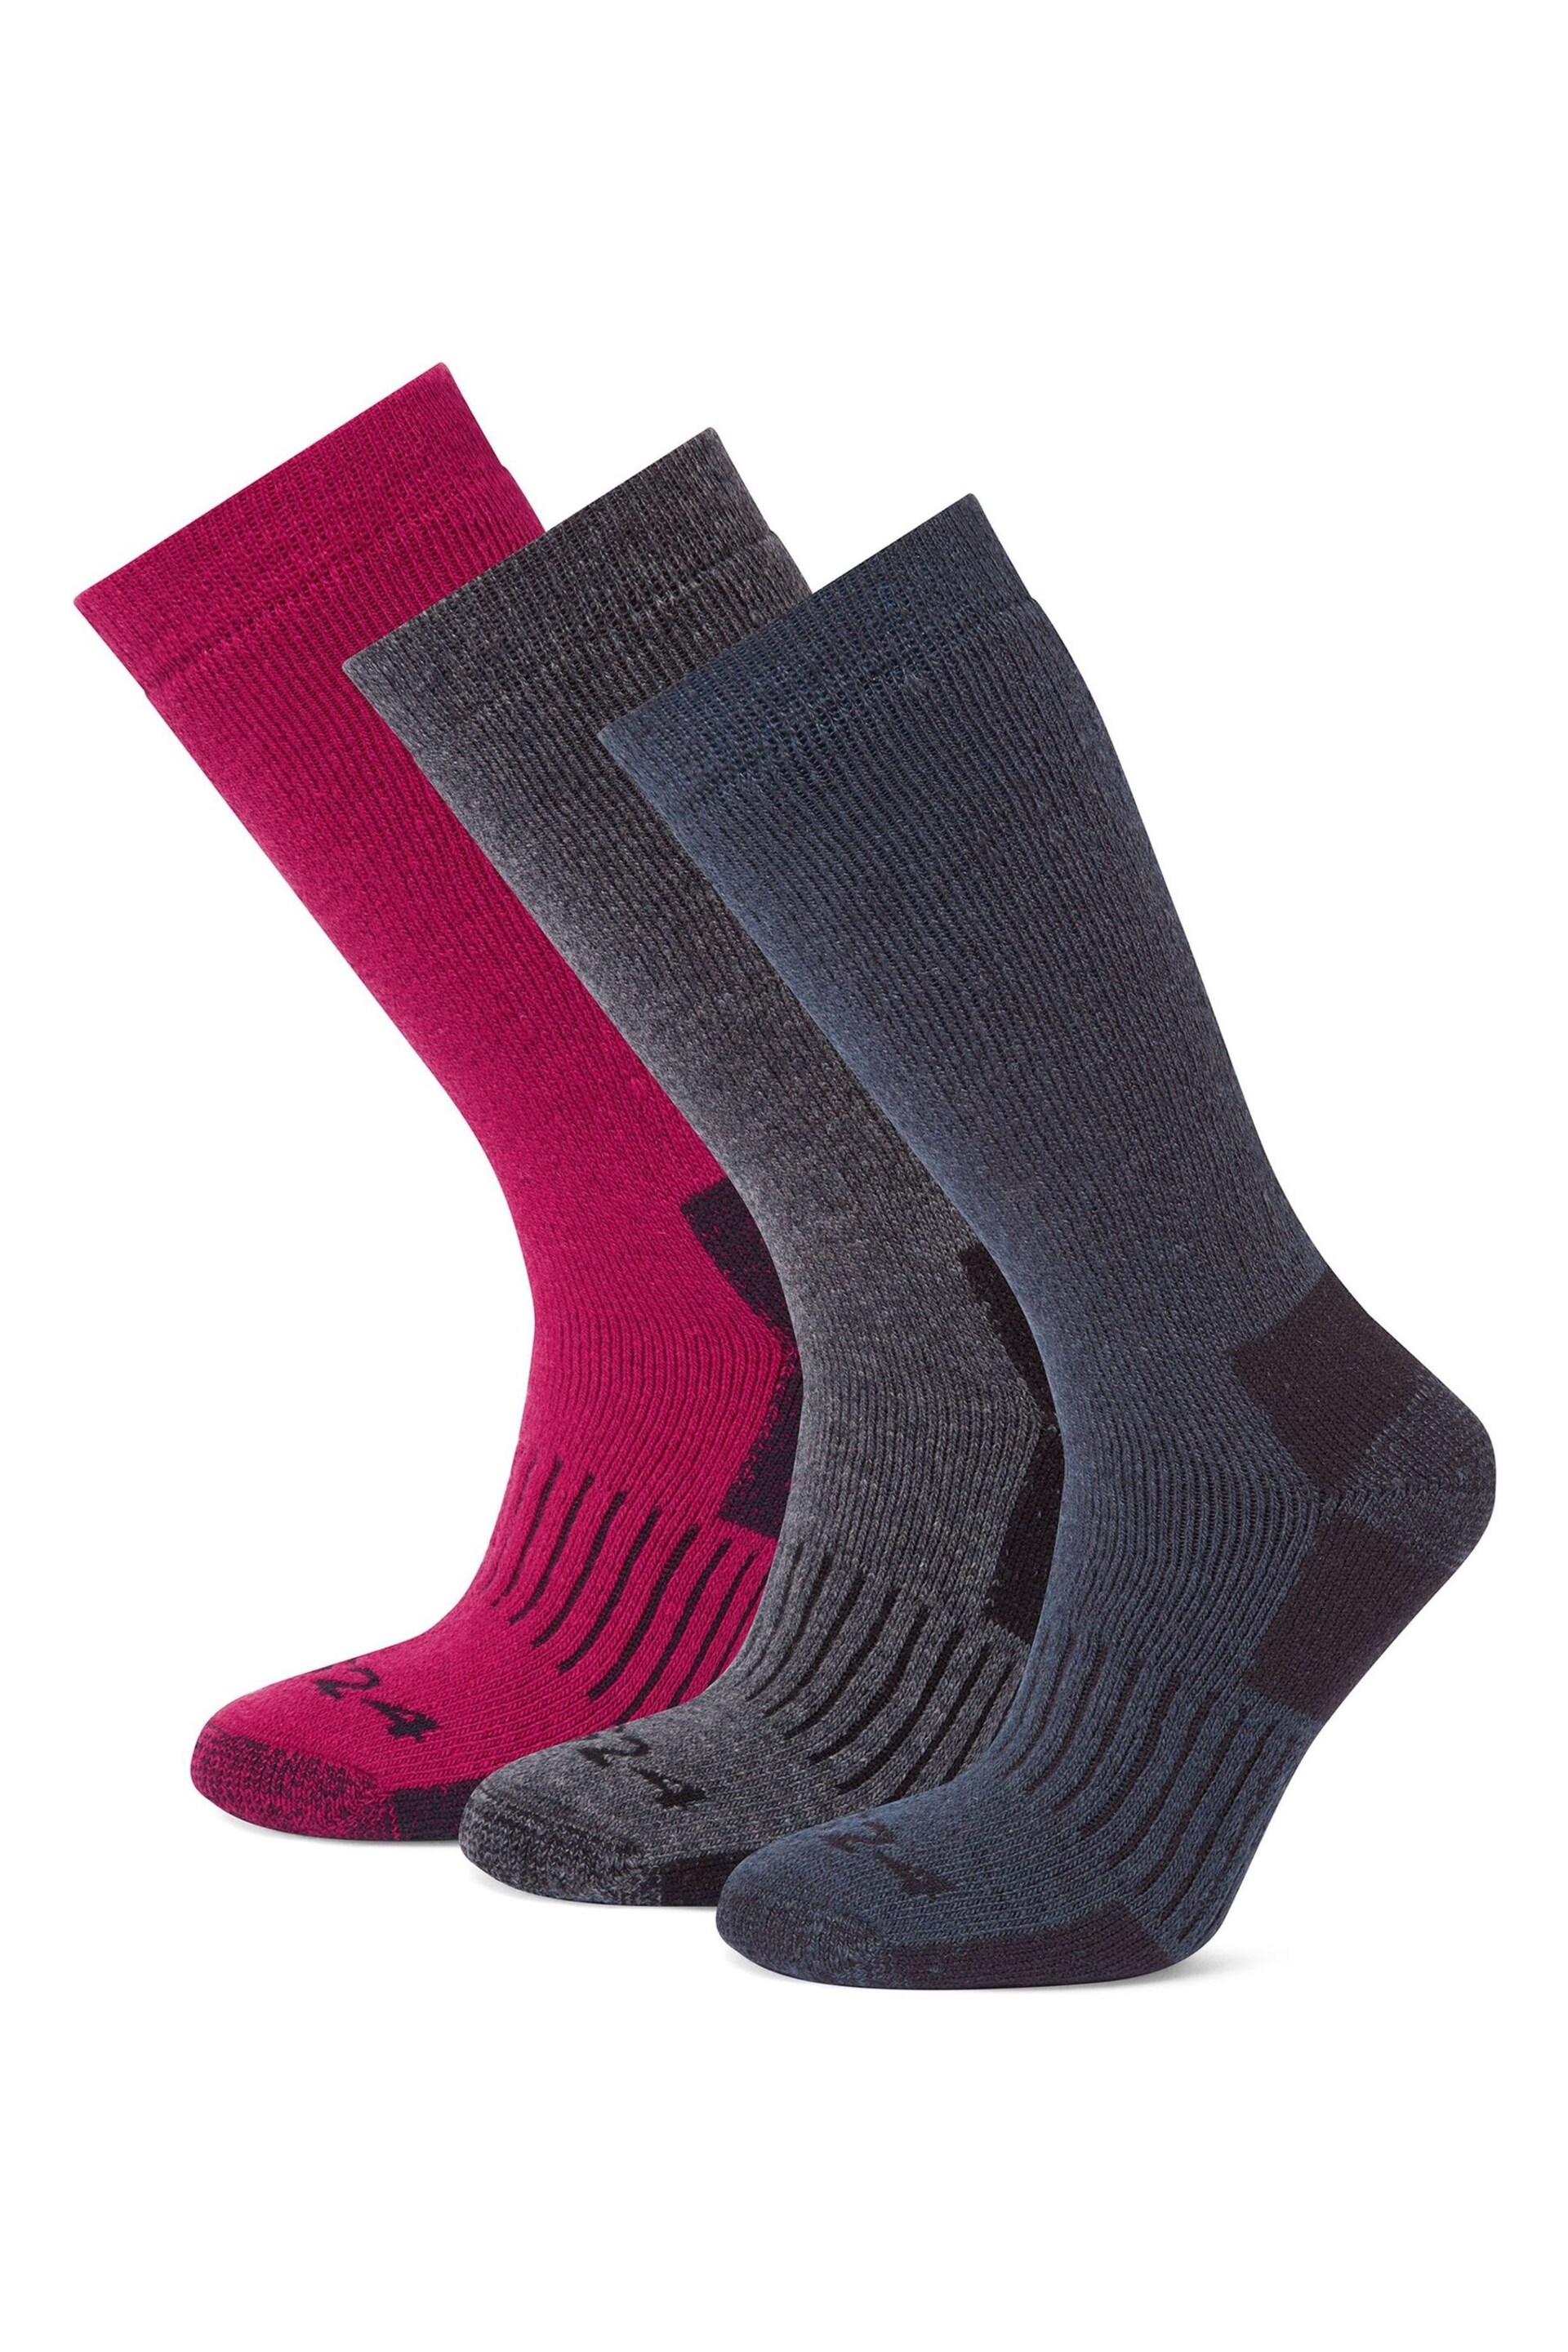 Tog 24 Pink Villach Trek Socks 3 Packs - Image 1 of 2